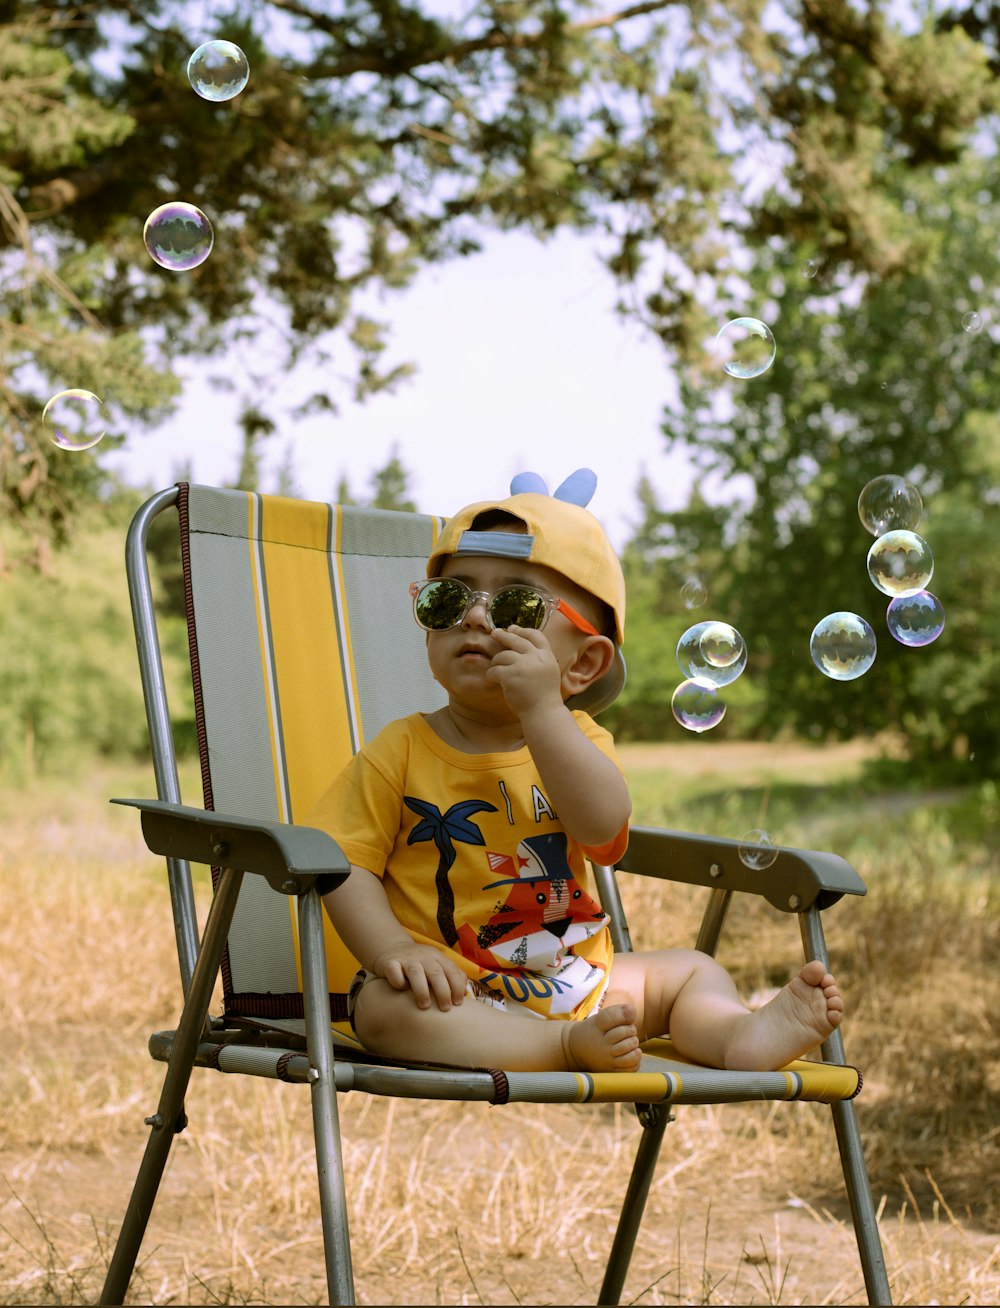 a little boy sitting in a lawn chair blowing bubbles